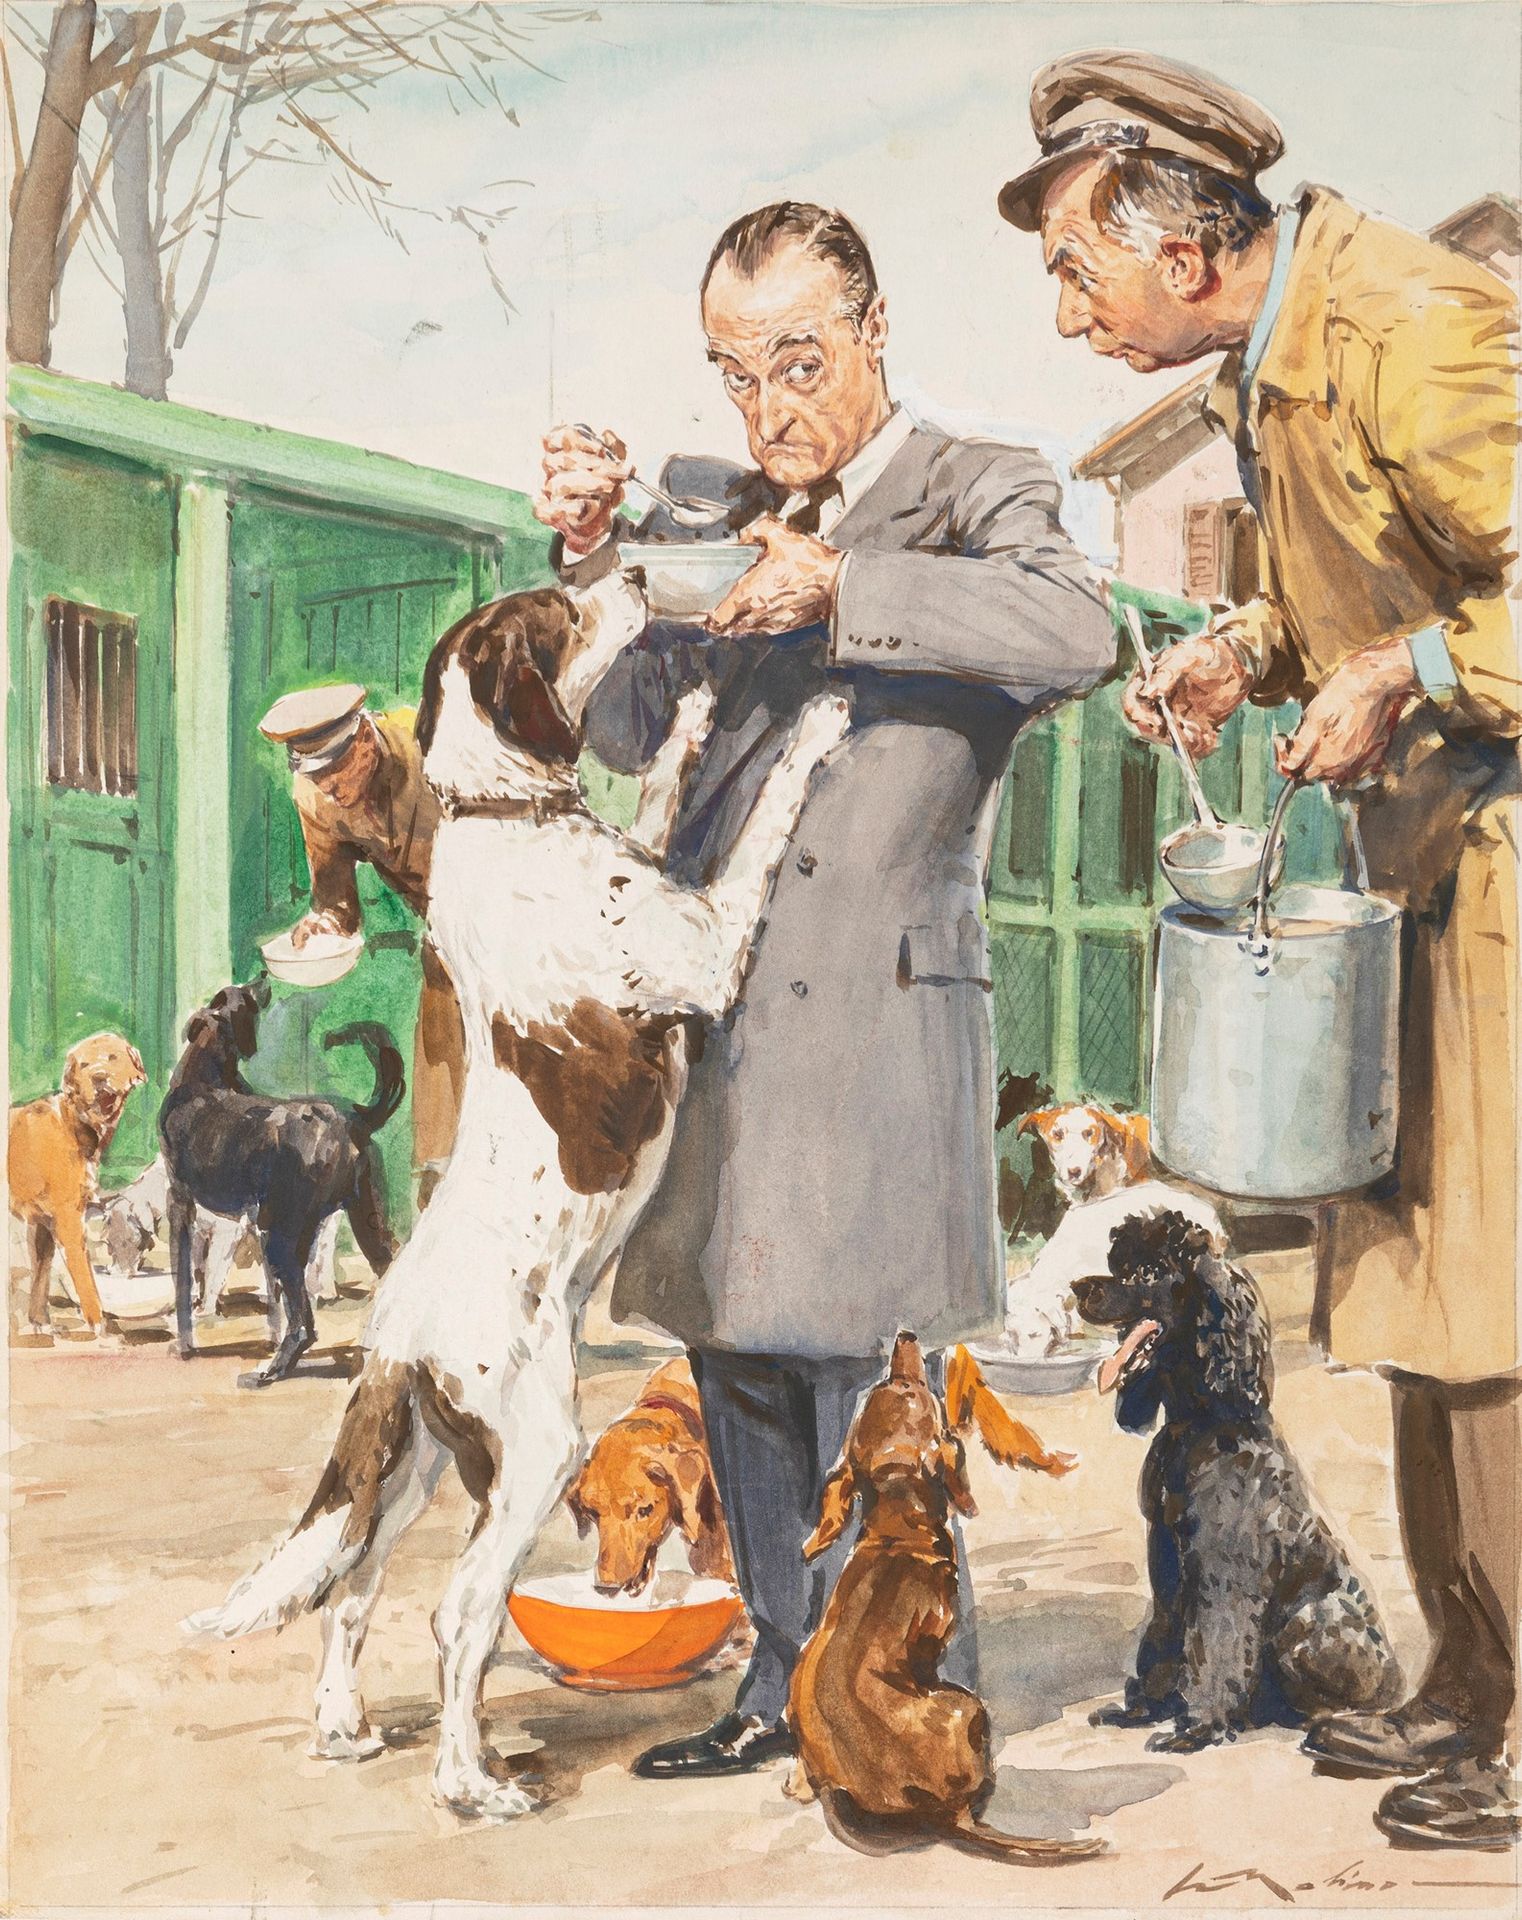 Walter Molino Totò e i suoi cani

Tempera und Aquarell auf dünnem Karton
26 x 32&hellip;